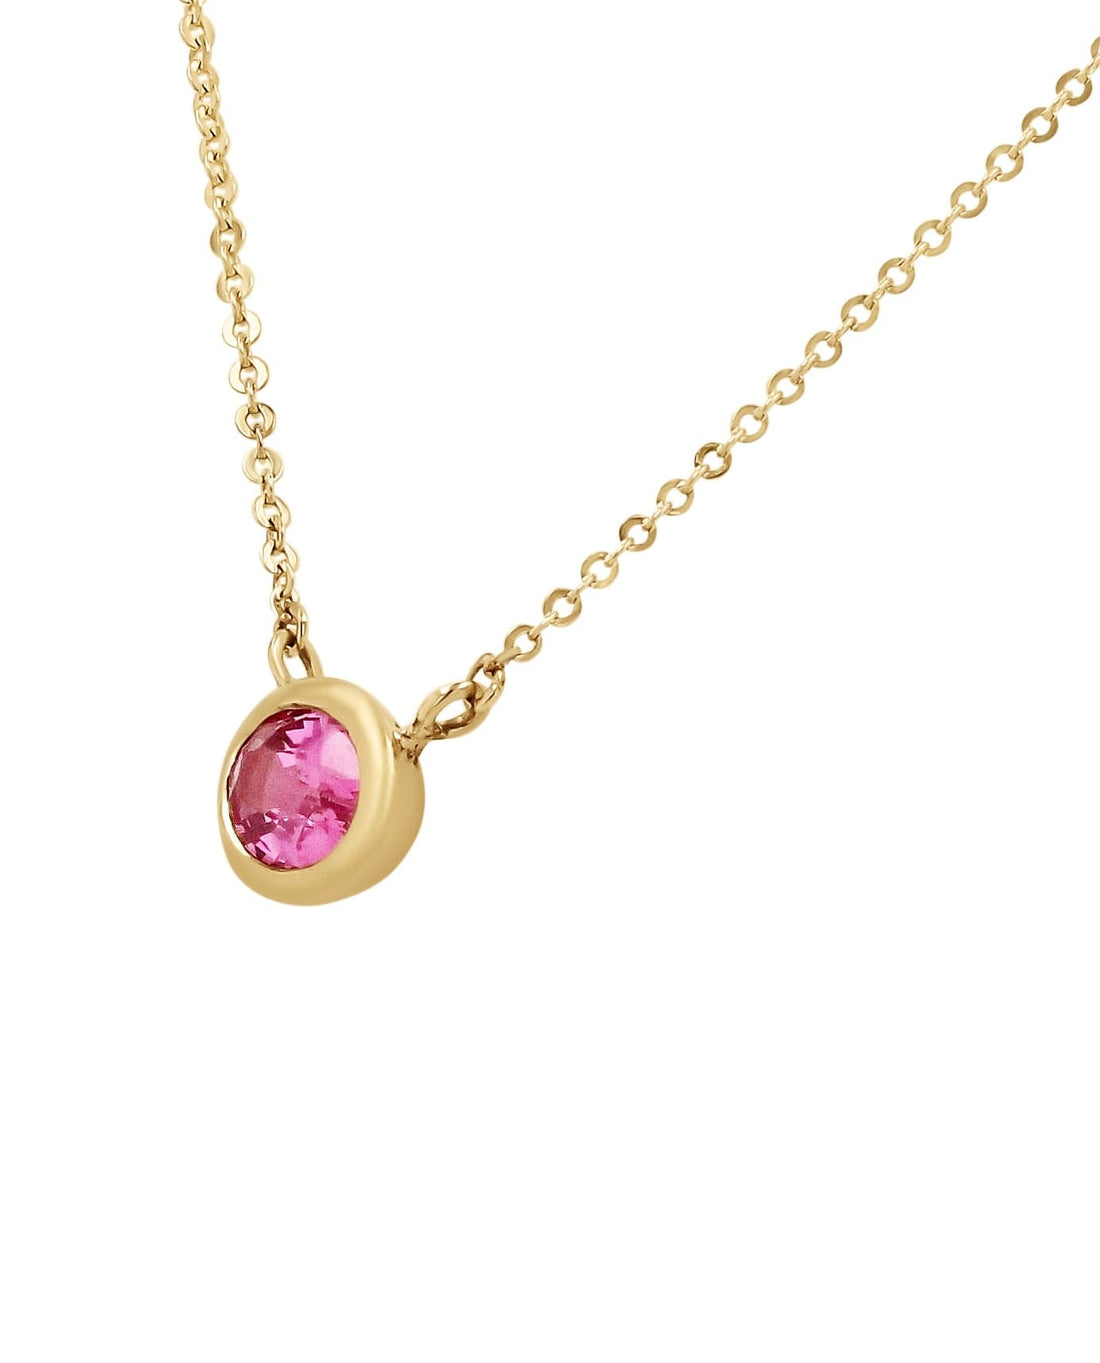 Pink Spinel Bezel Pendant Necklace - Skeie's Jewelers